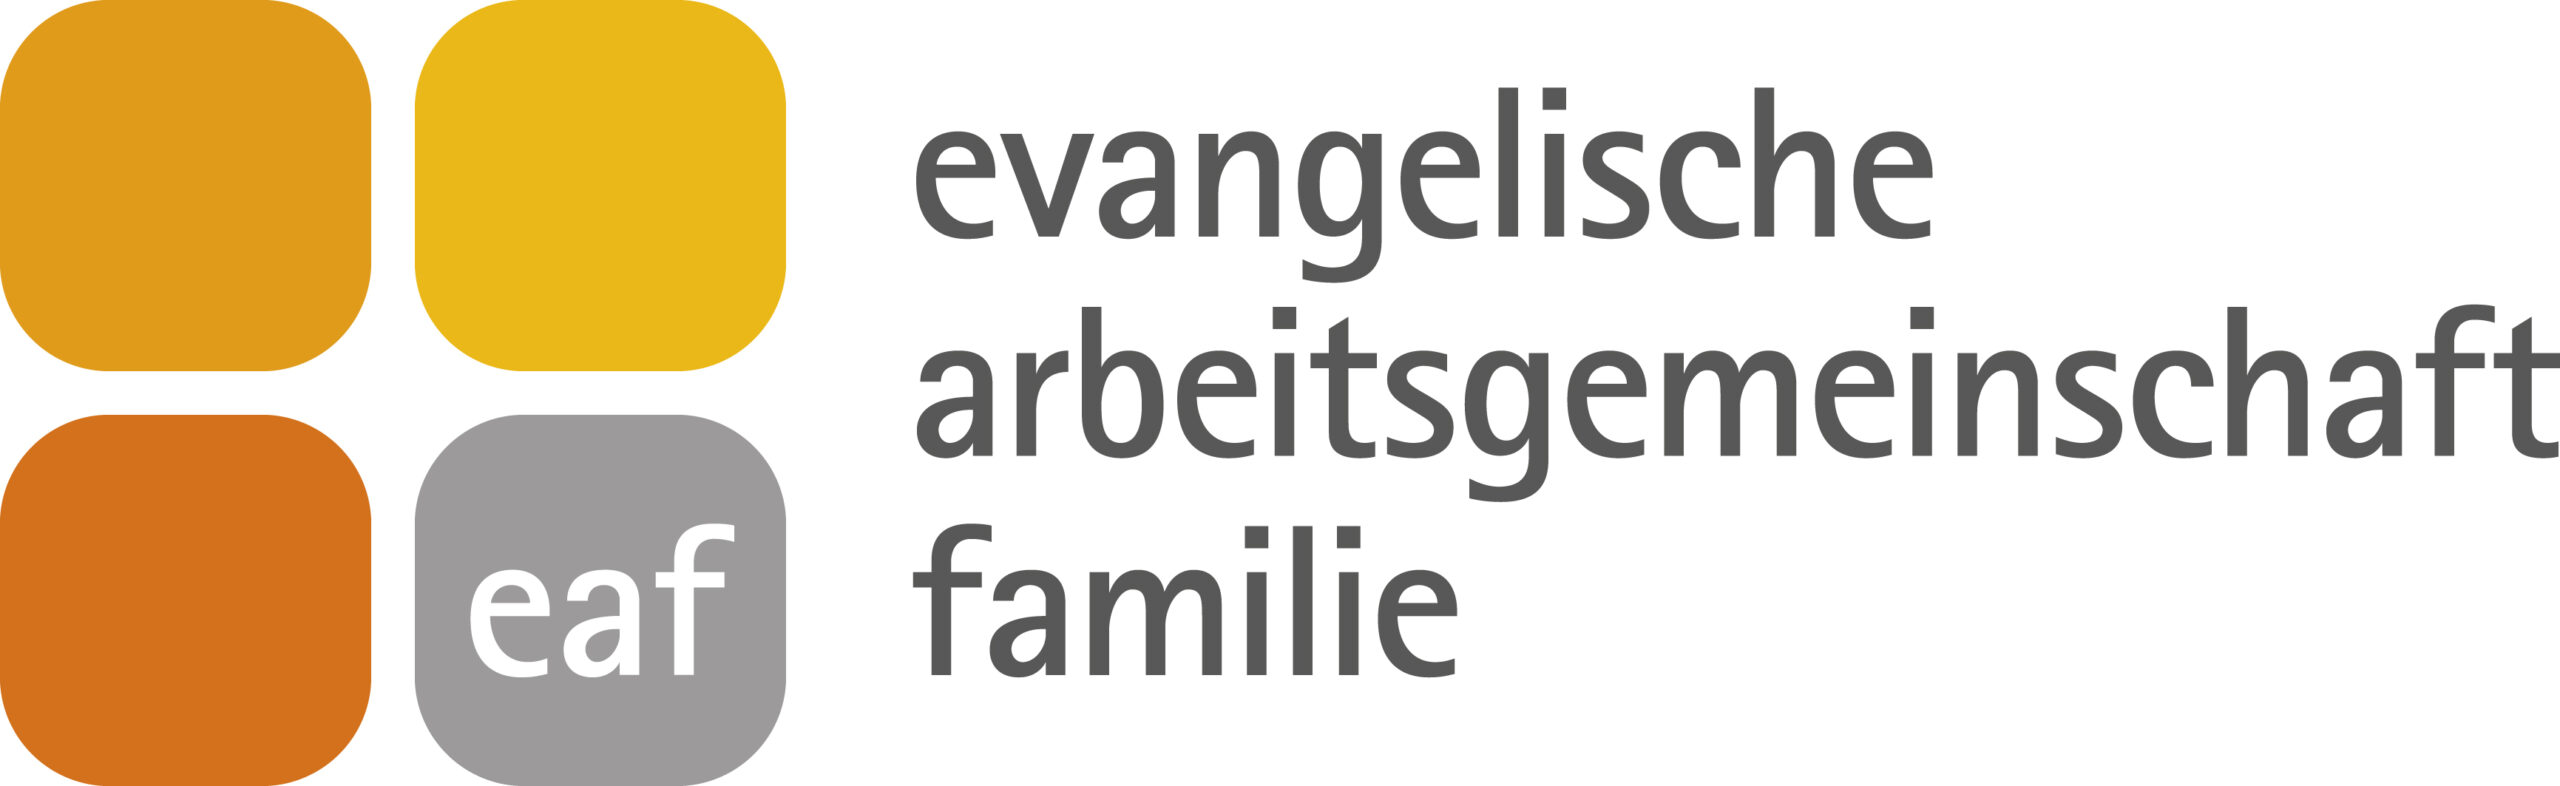 evangelische arbeitsgemeinschaft familie